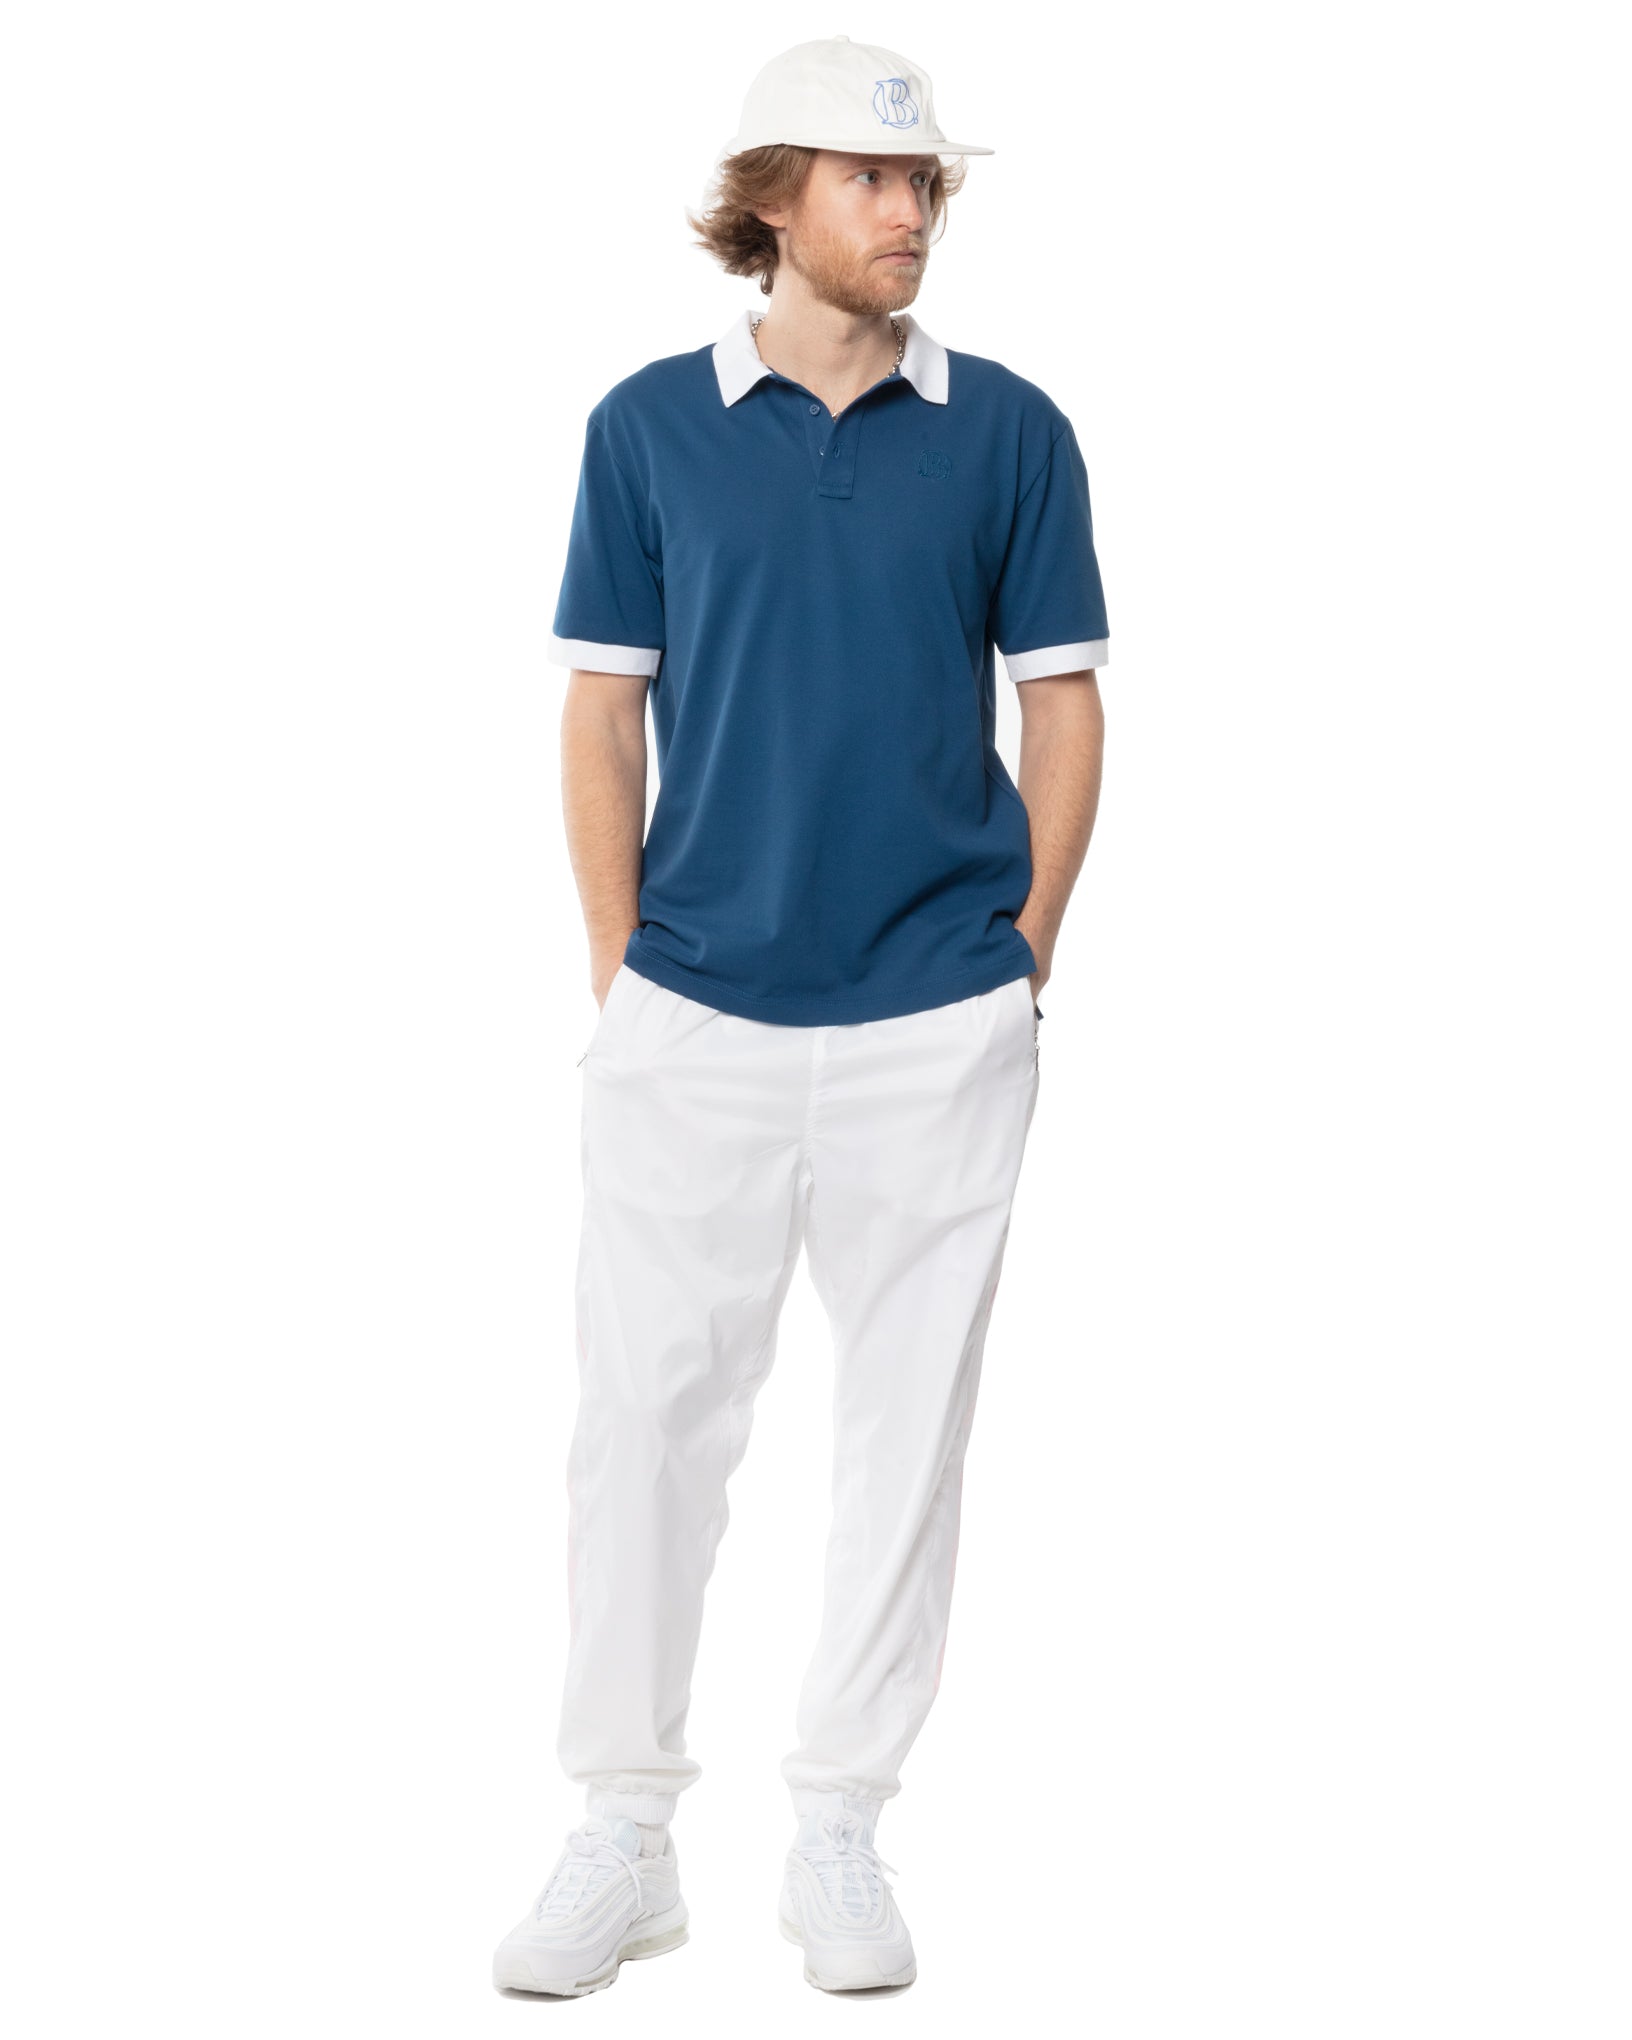 Two-Tone Short Sleeve Polo